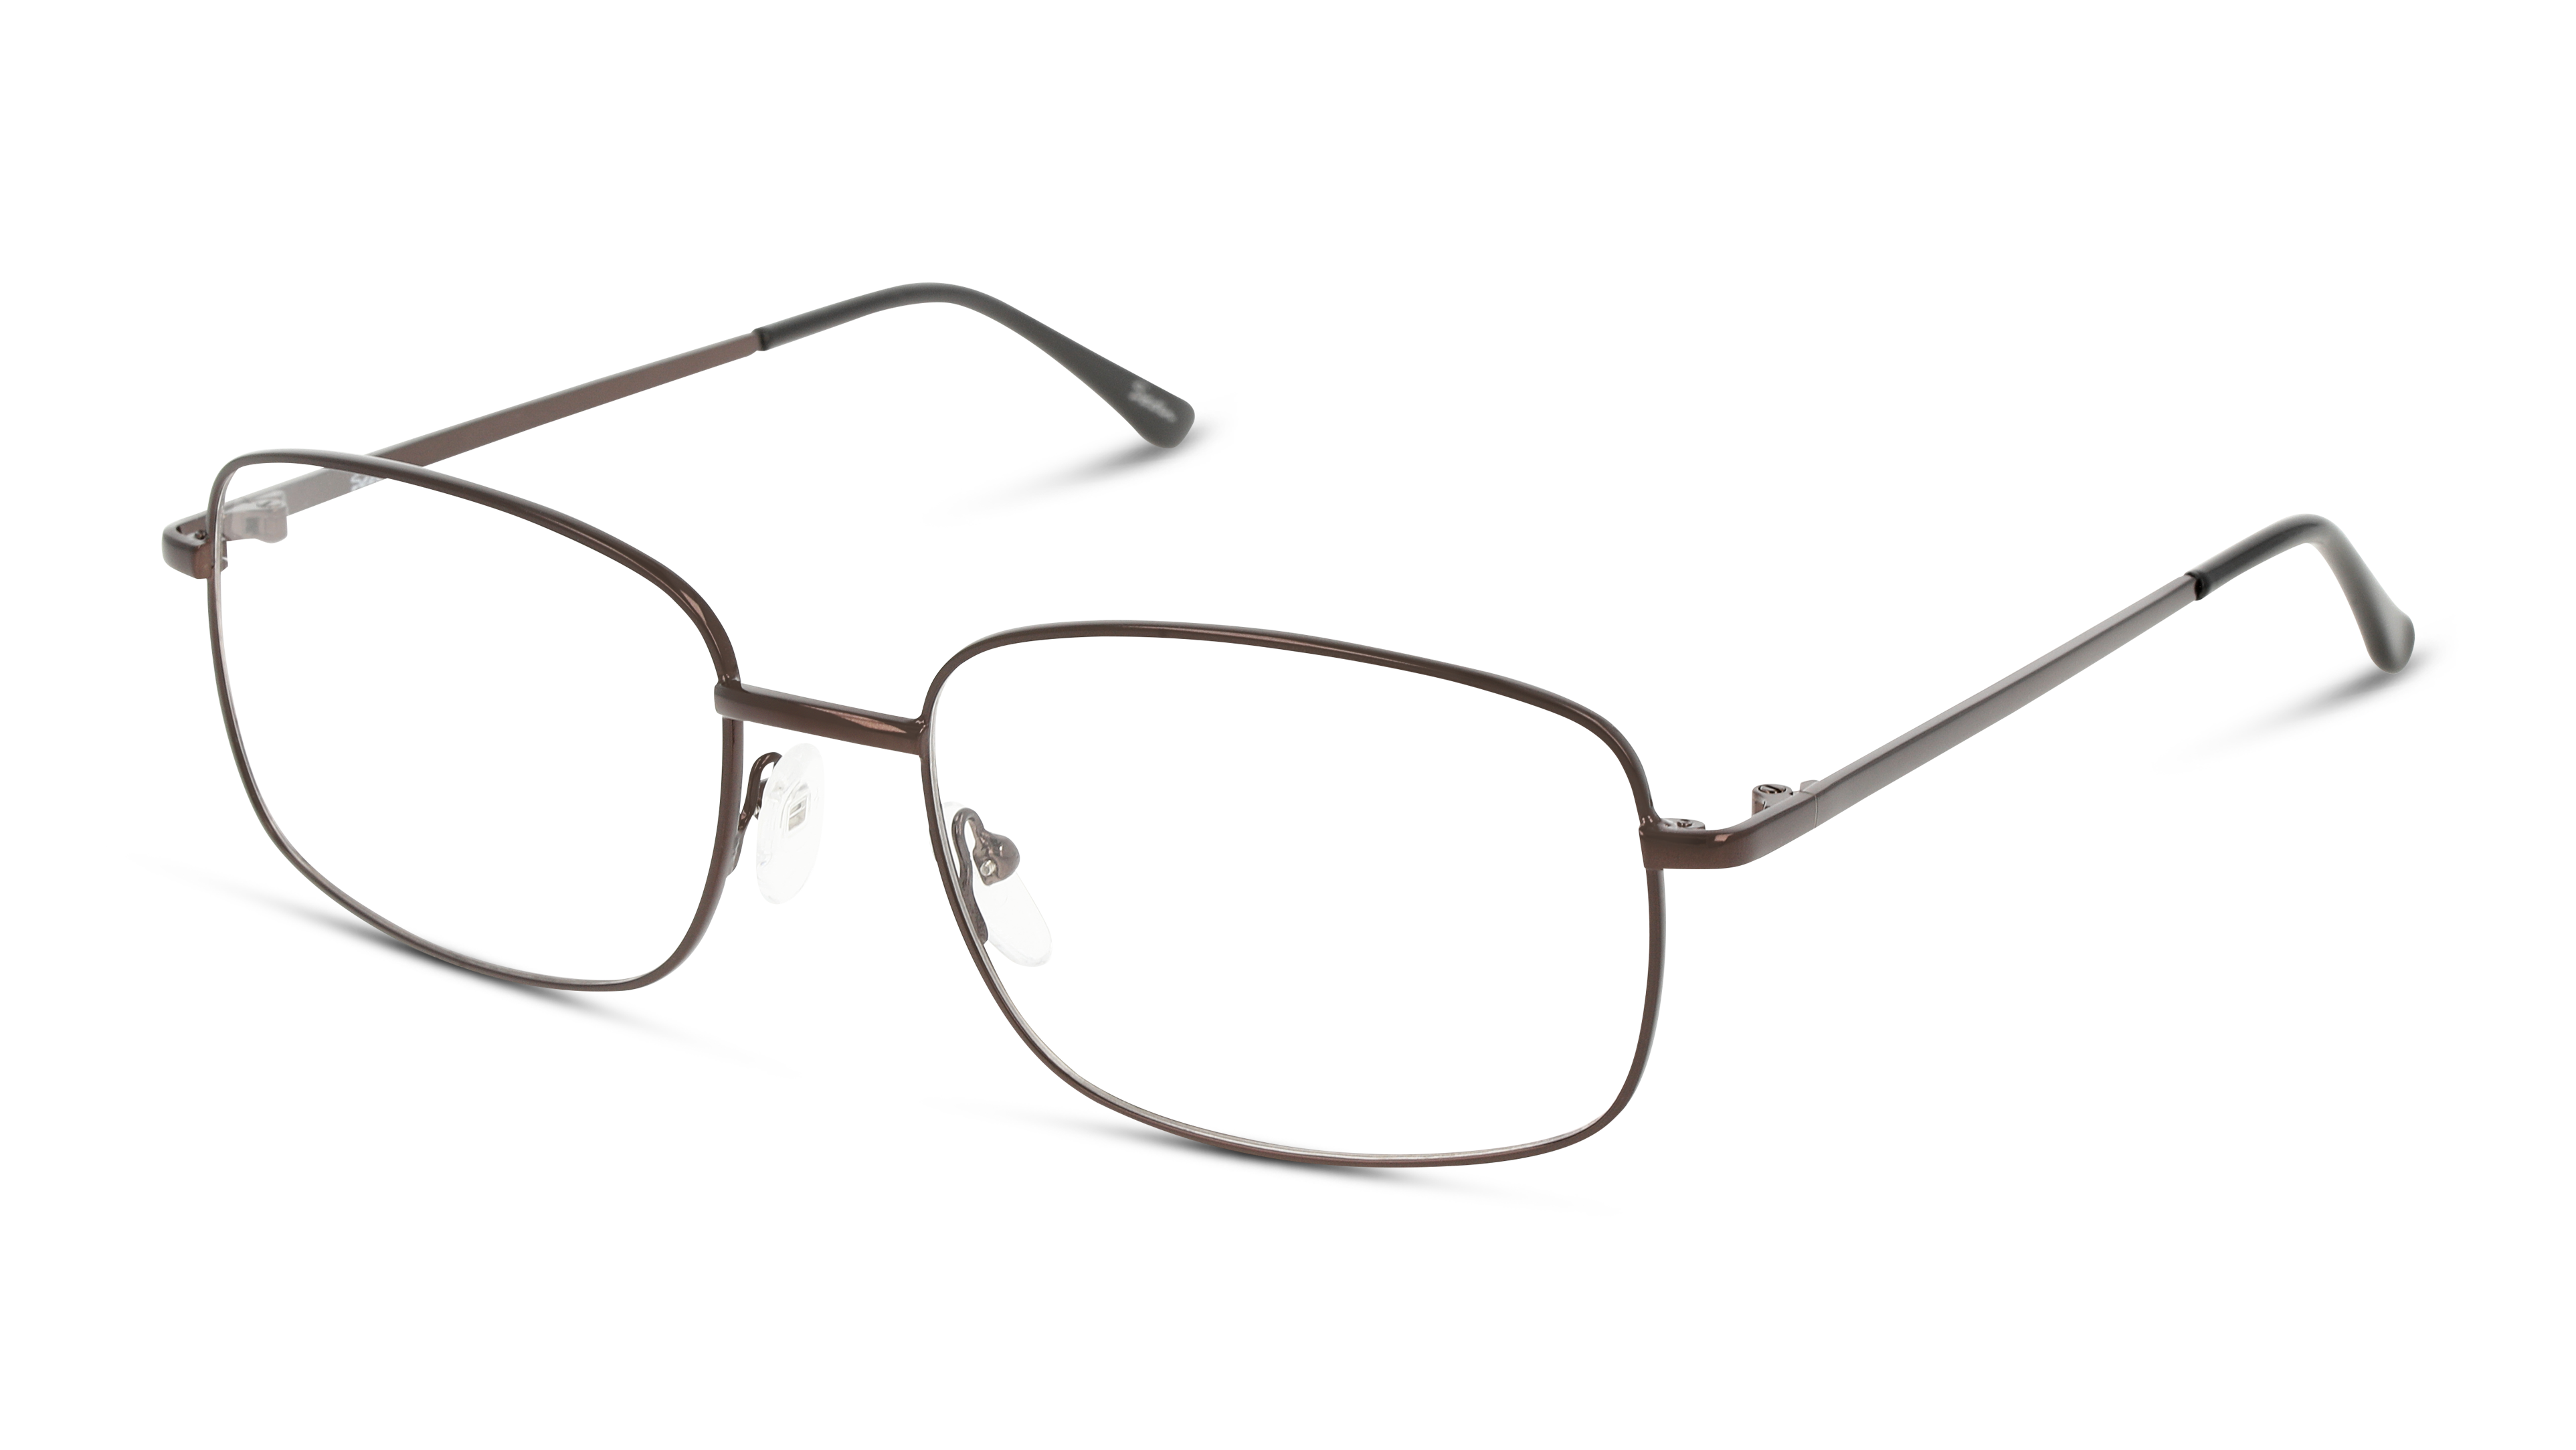 Angle_Left01 Seen SN OM0001 (Large) (NN00) Glasses Transparent / Brown